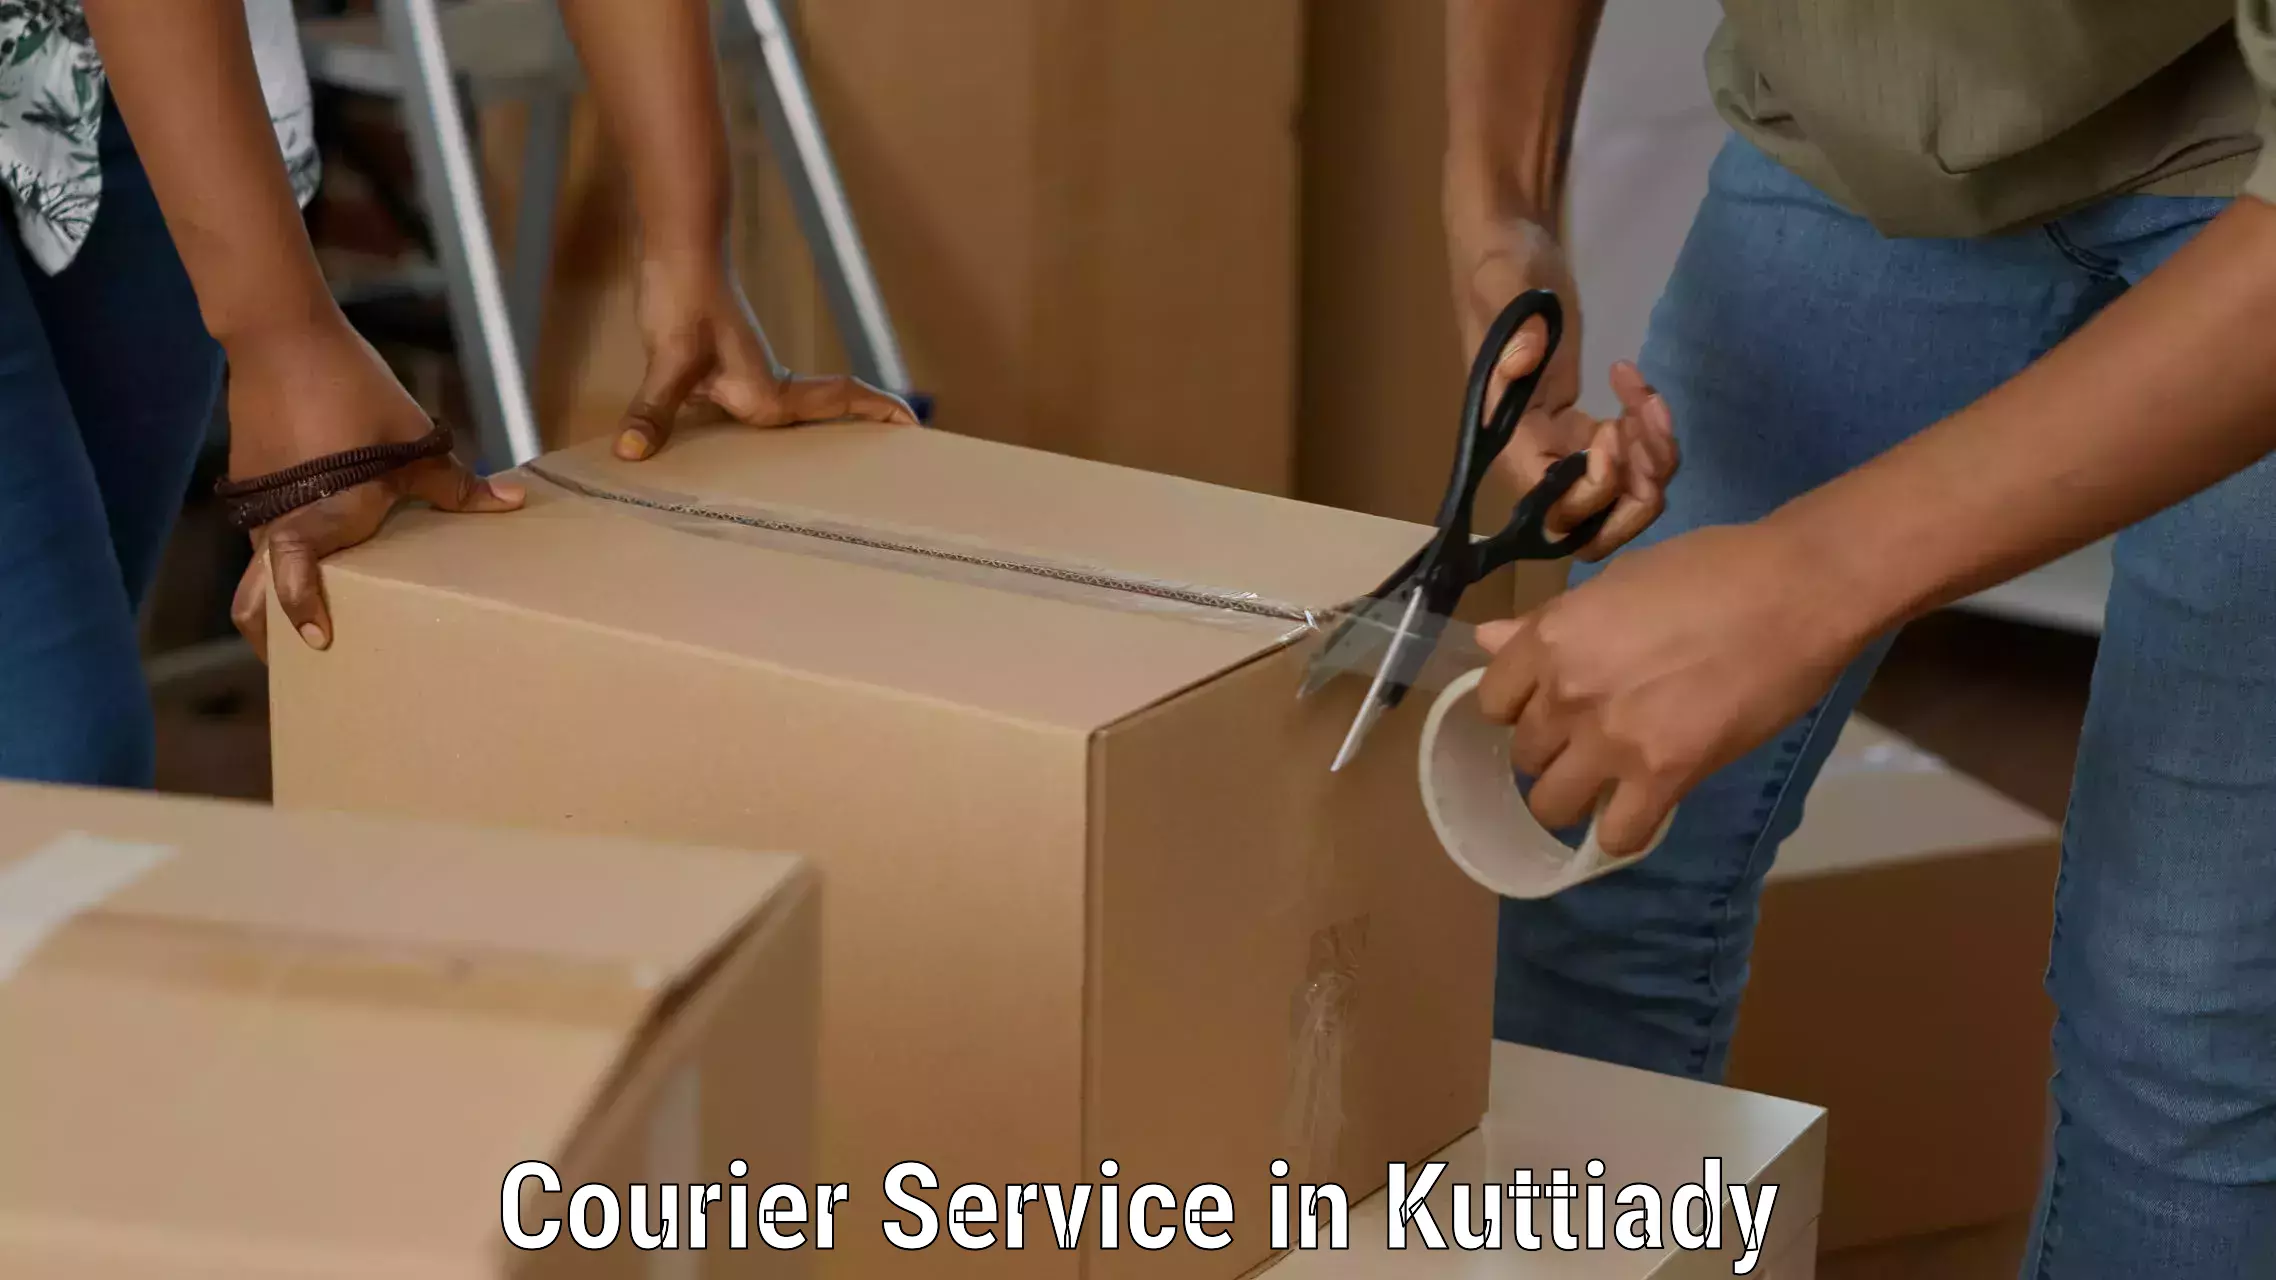 Individual parcel service in Kuttiady